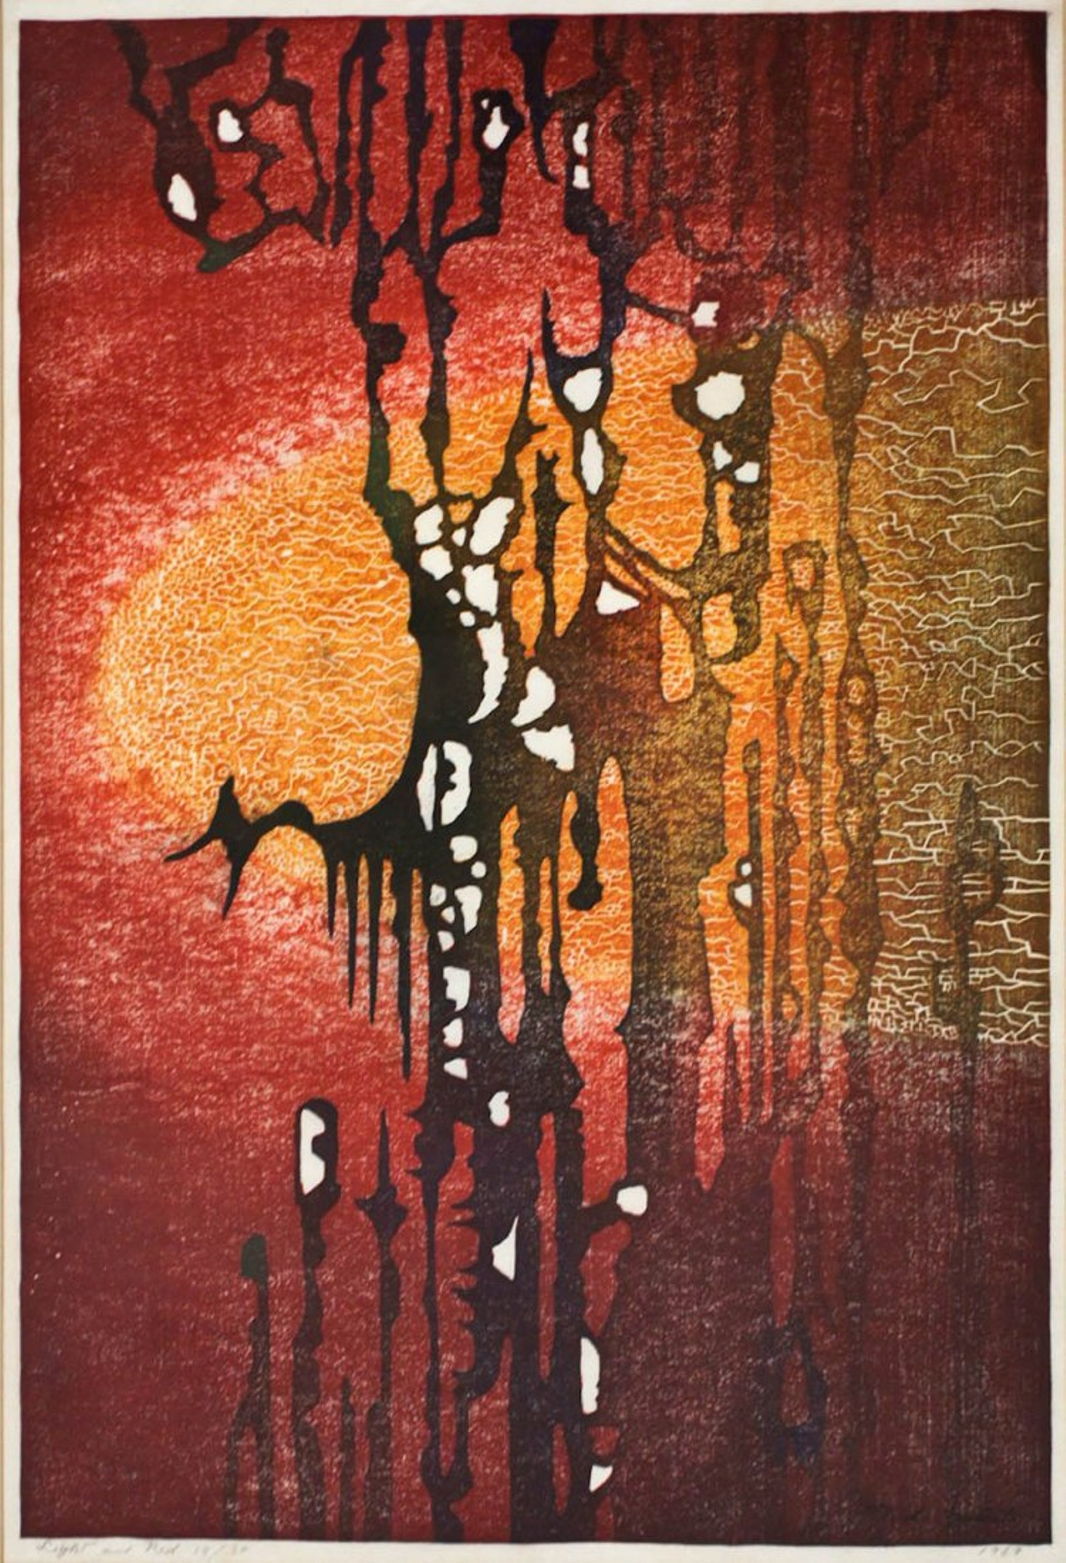 Toshi Yoshida “Light and Red” 1964 woodblock print